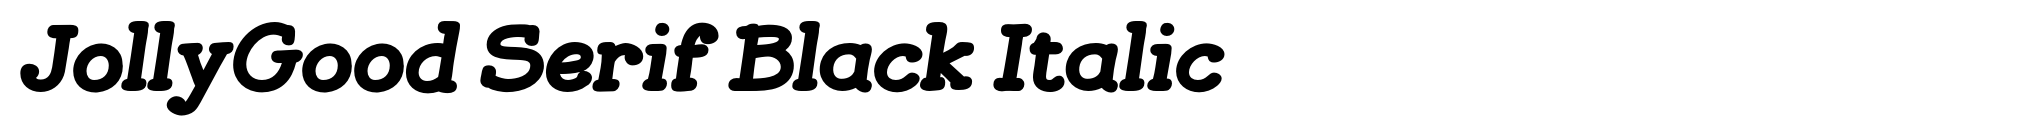 JollyGood Serif Black Italic image